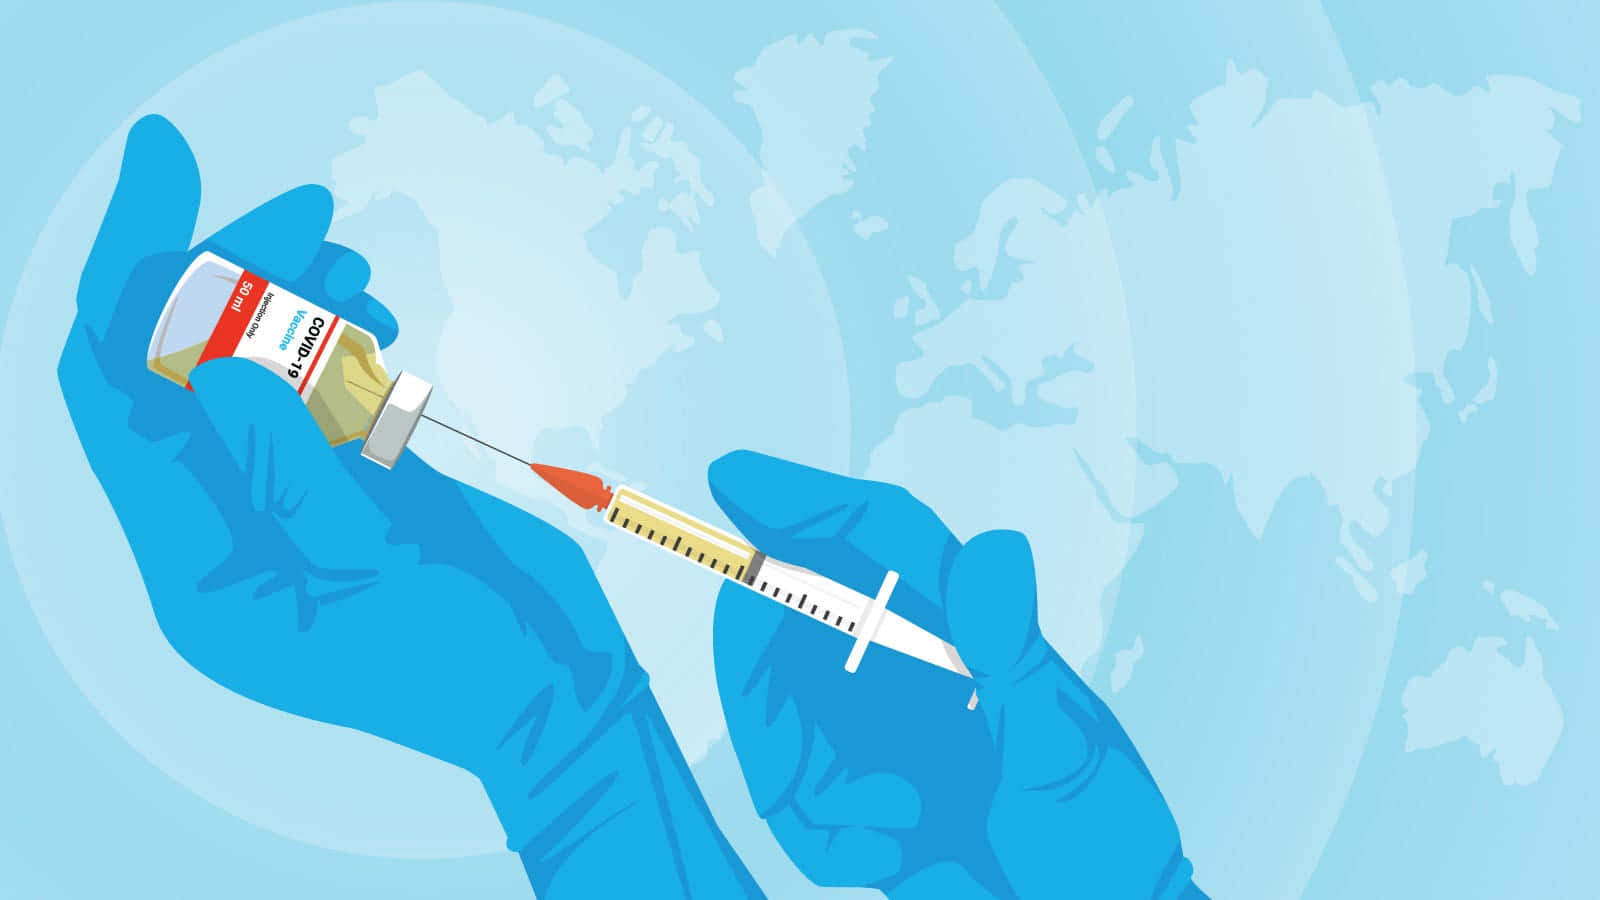 Covid-19 Vaccine Loading Syringe Digital Art Background